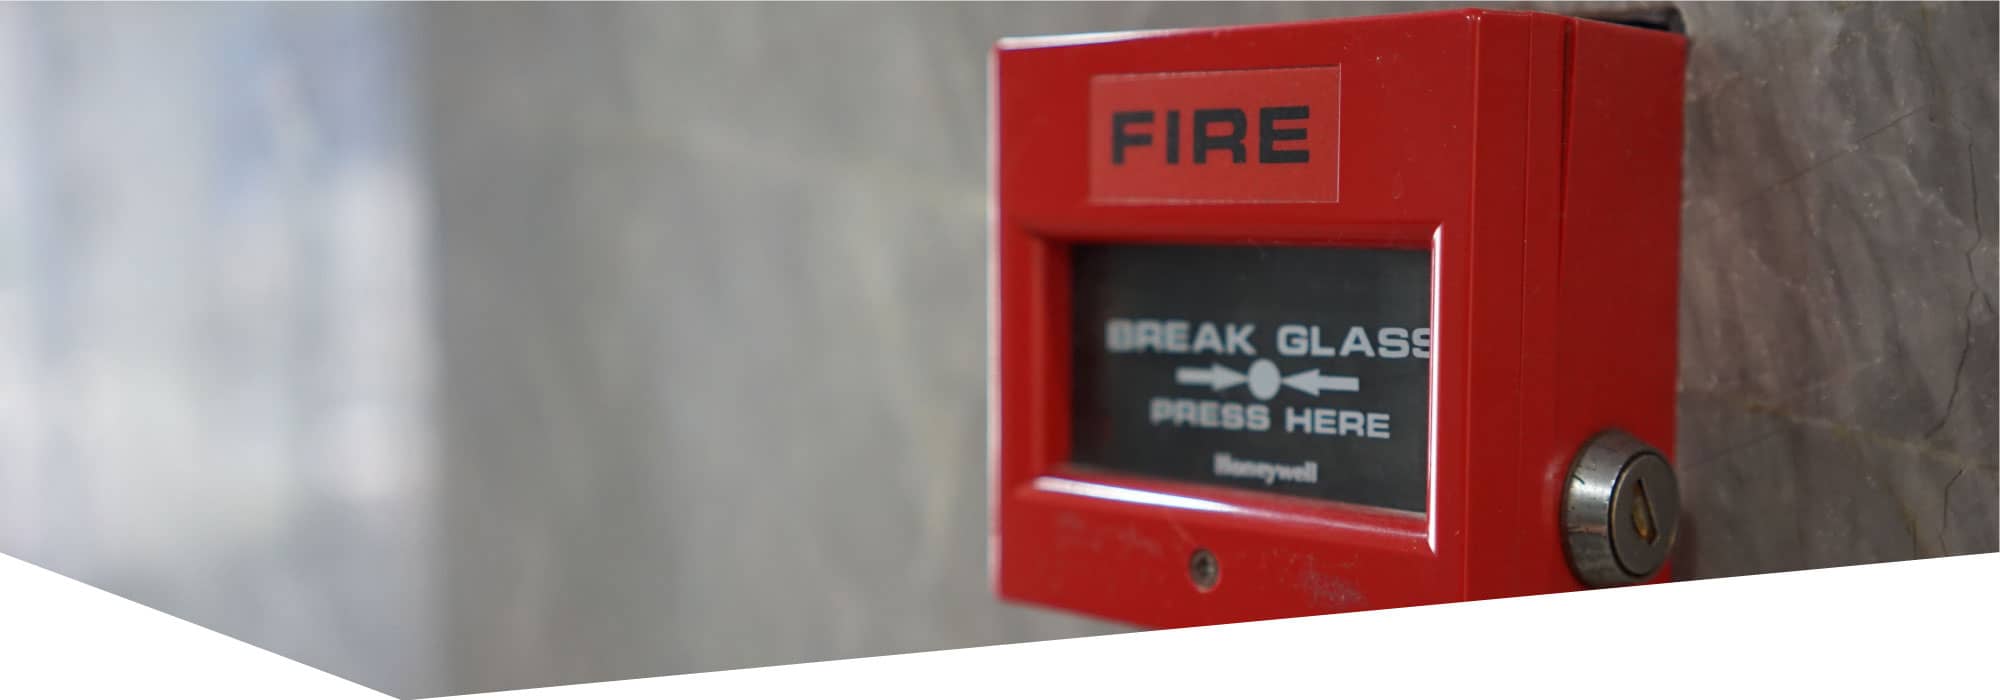 Fire alarm at Wrexham school